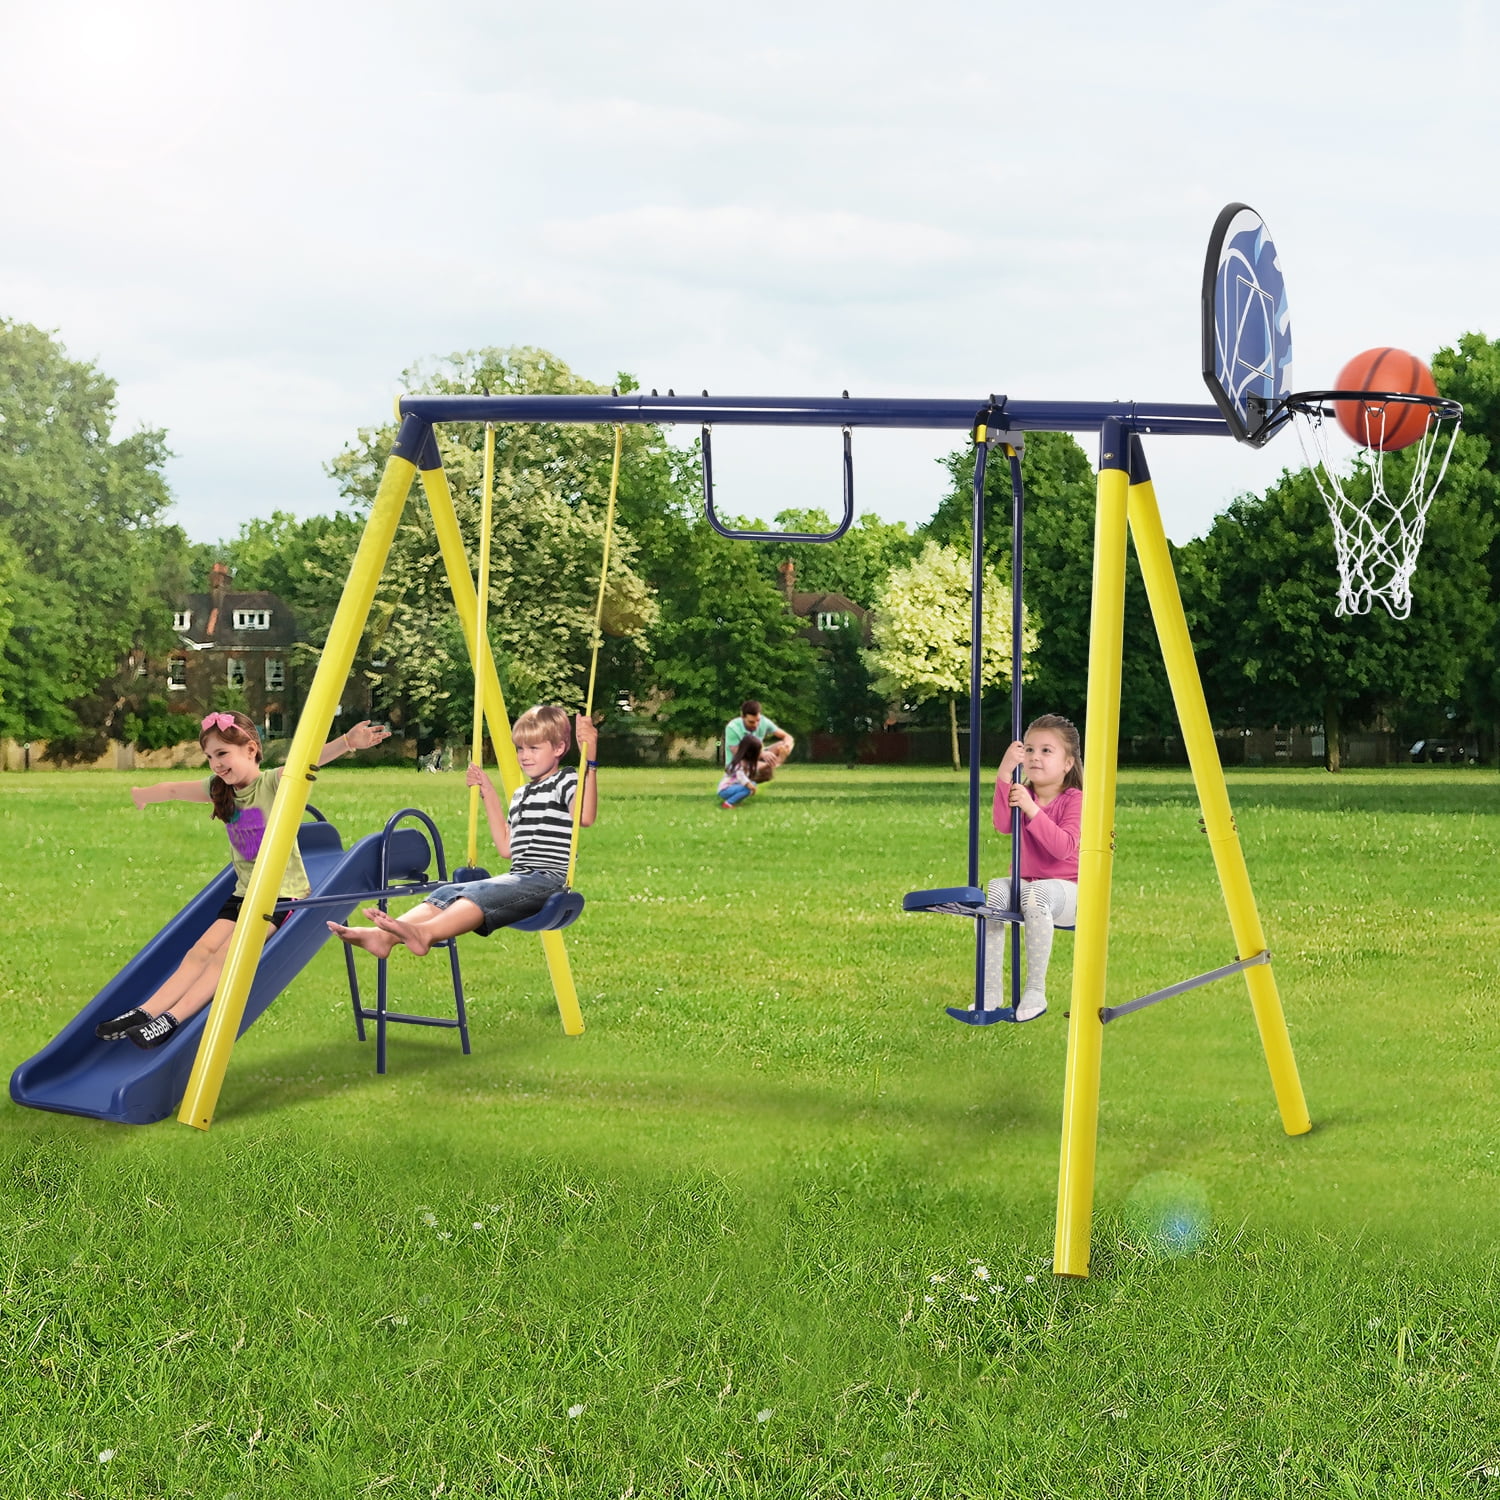 Playground Metal Swing Set Outdoor Play Kids Backyard 4 Seats For Children 3-12 